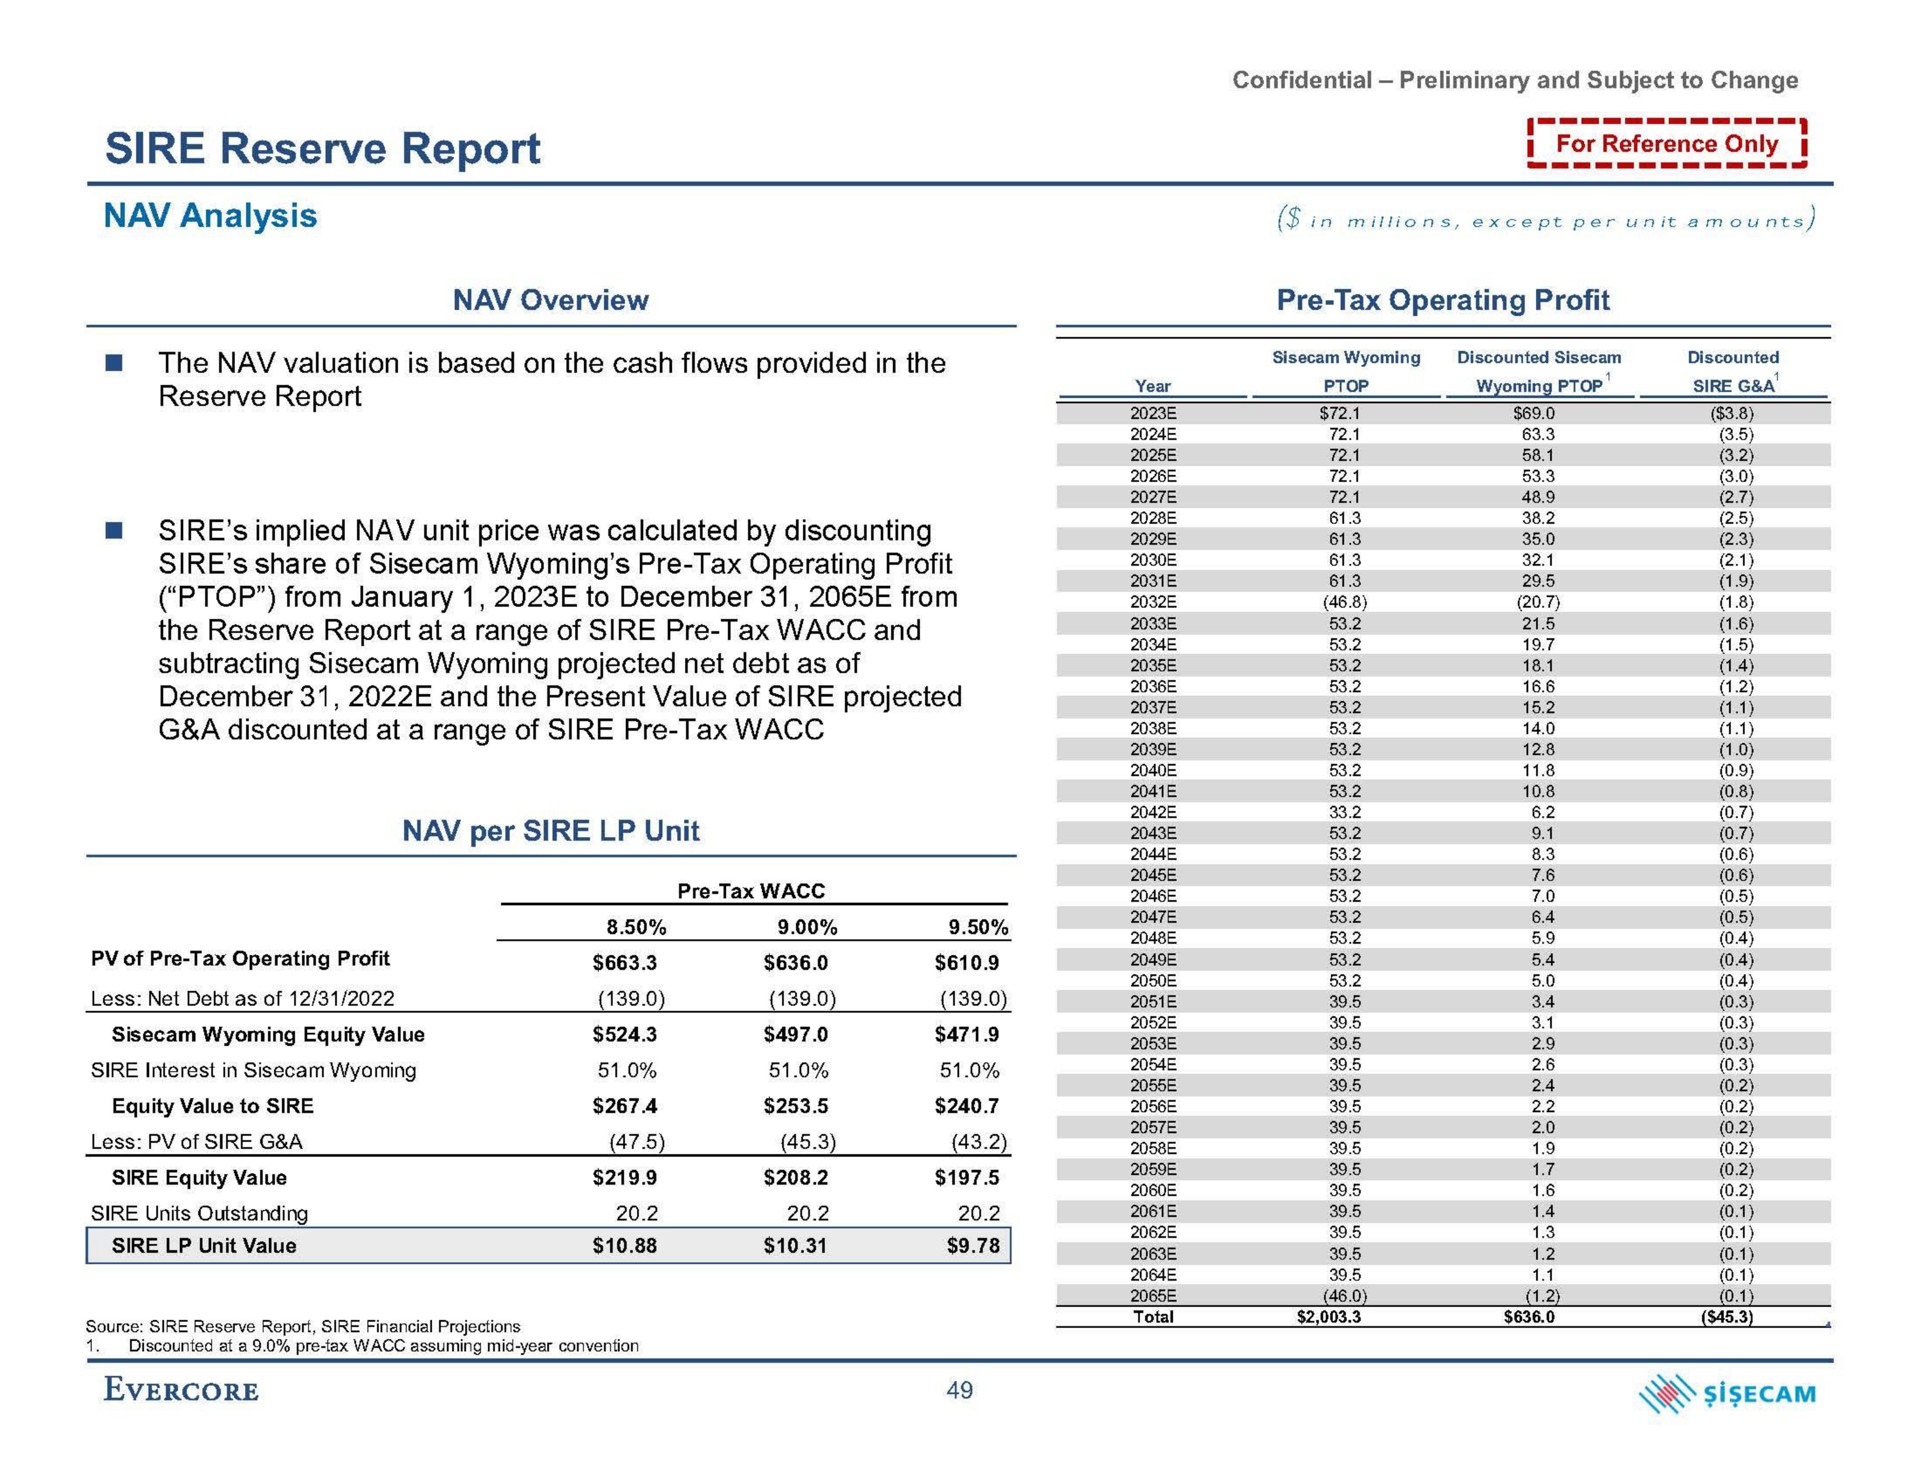 sire reserve report analysis | Evercore